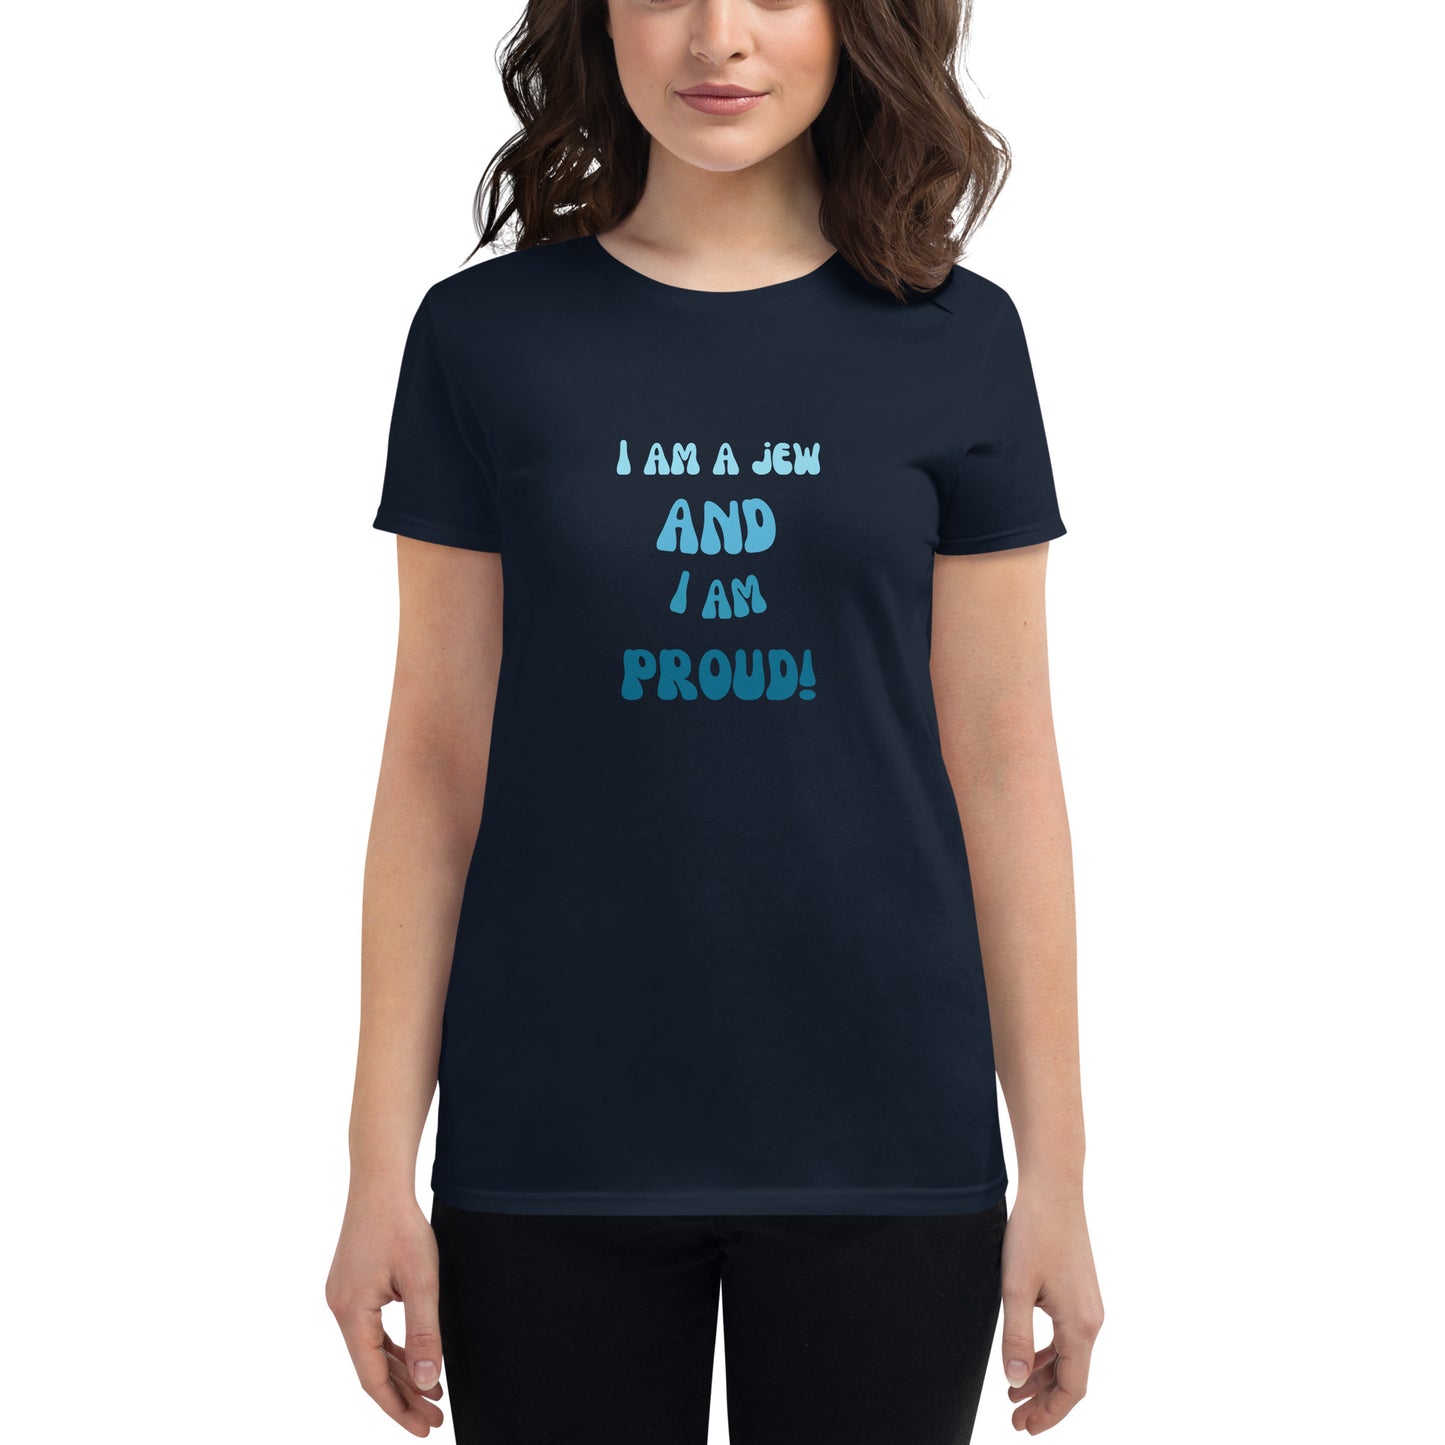 I'm a jew and i'm proud - Women's short sleeve t-shirt (5 colors)